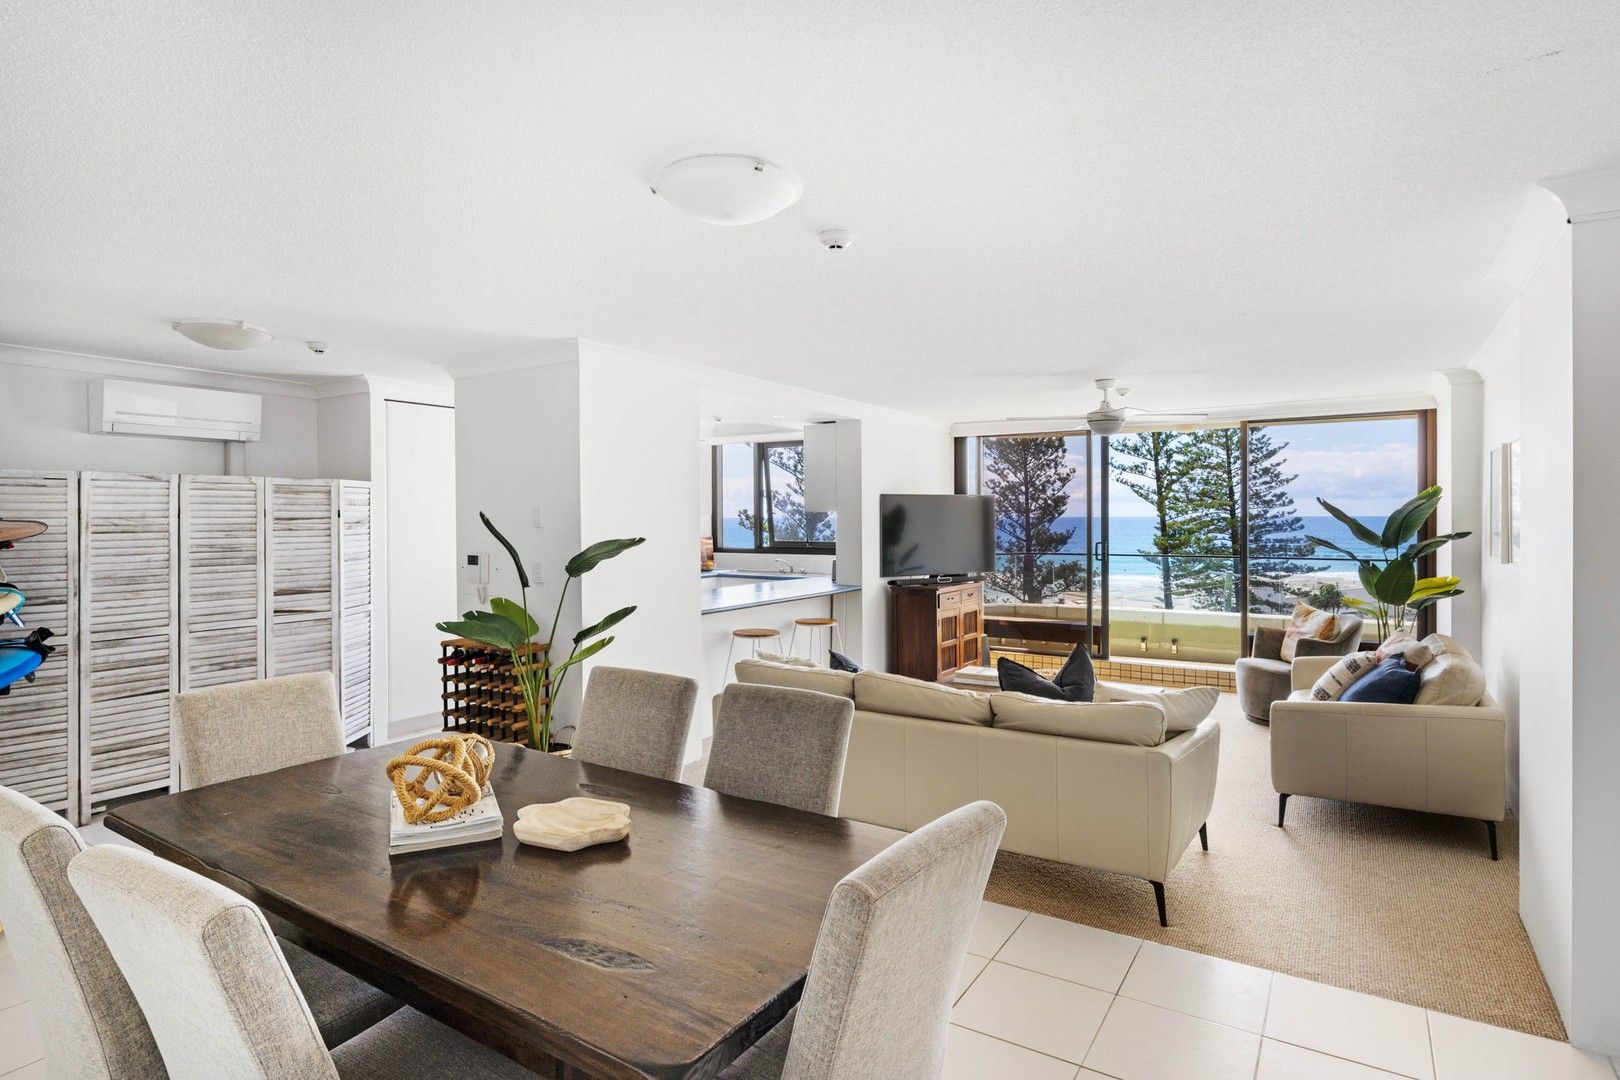 16/60 Goodwin Terrace, Burleigh Heads QLD 4220 - Apartment For Rent ...